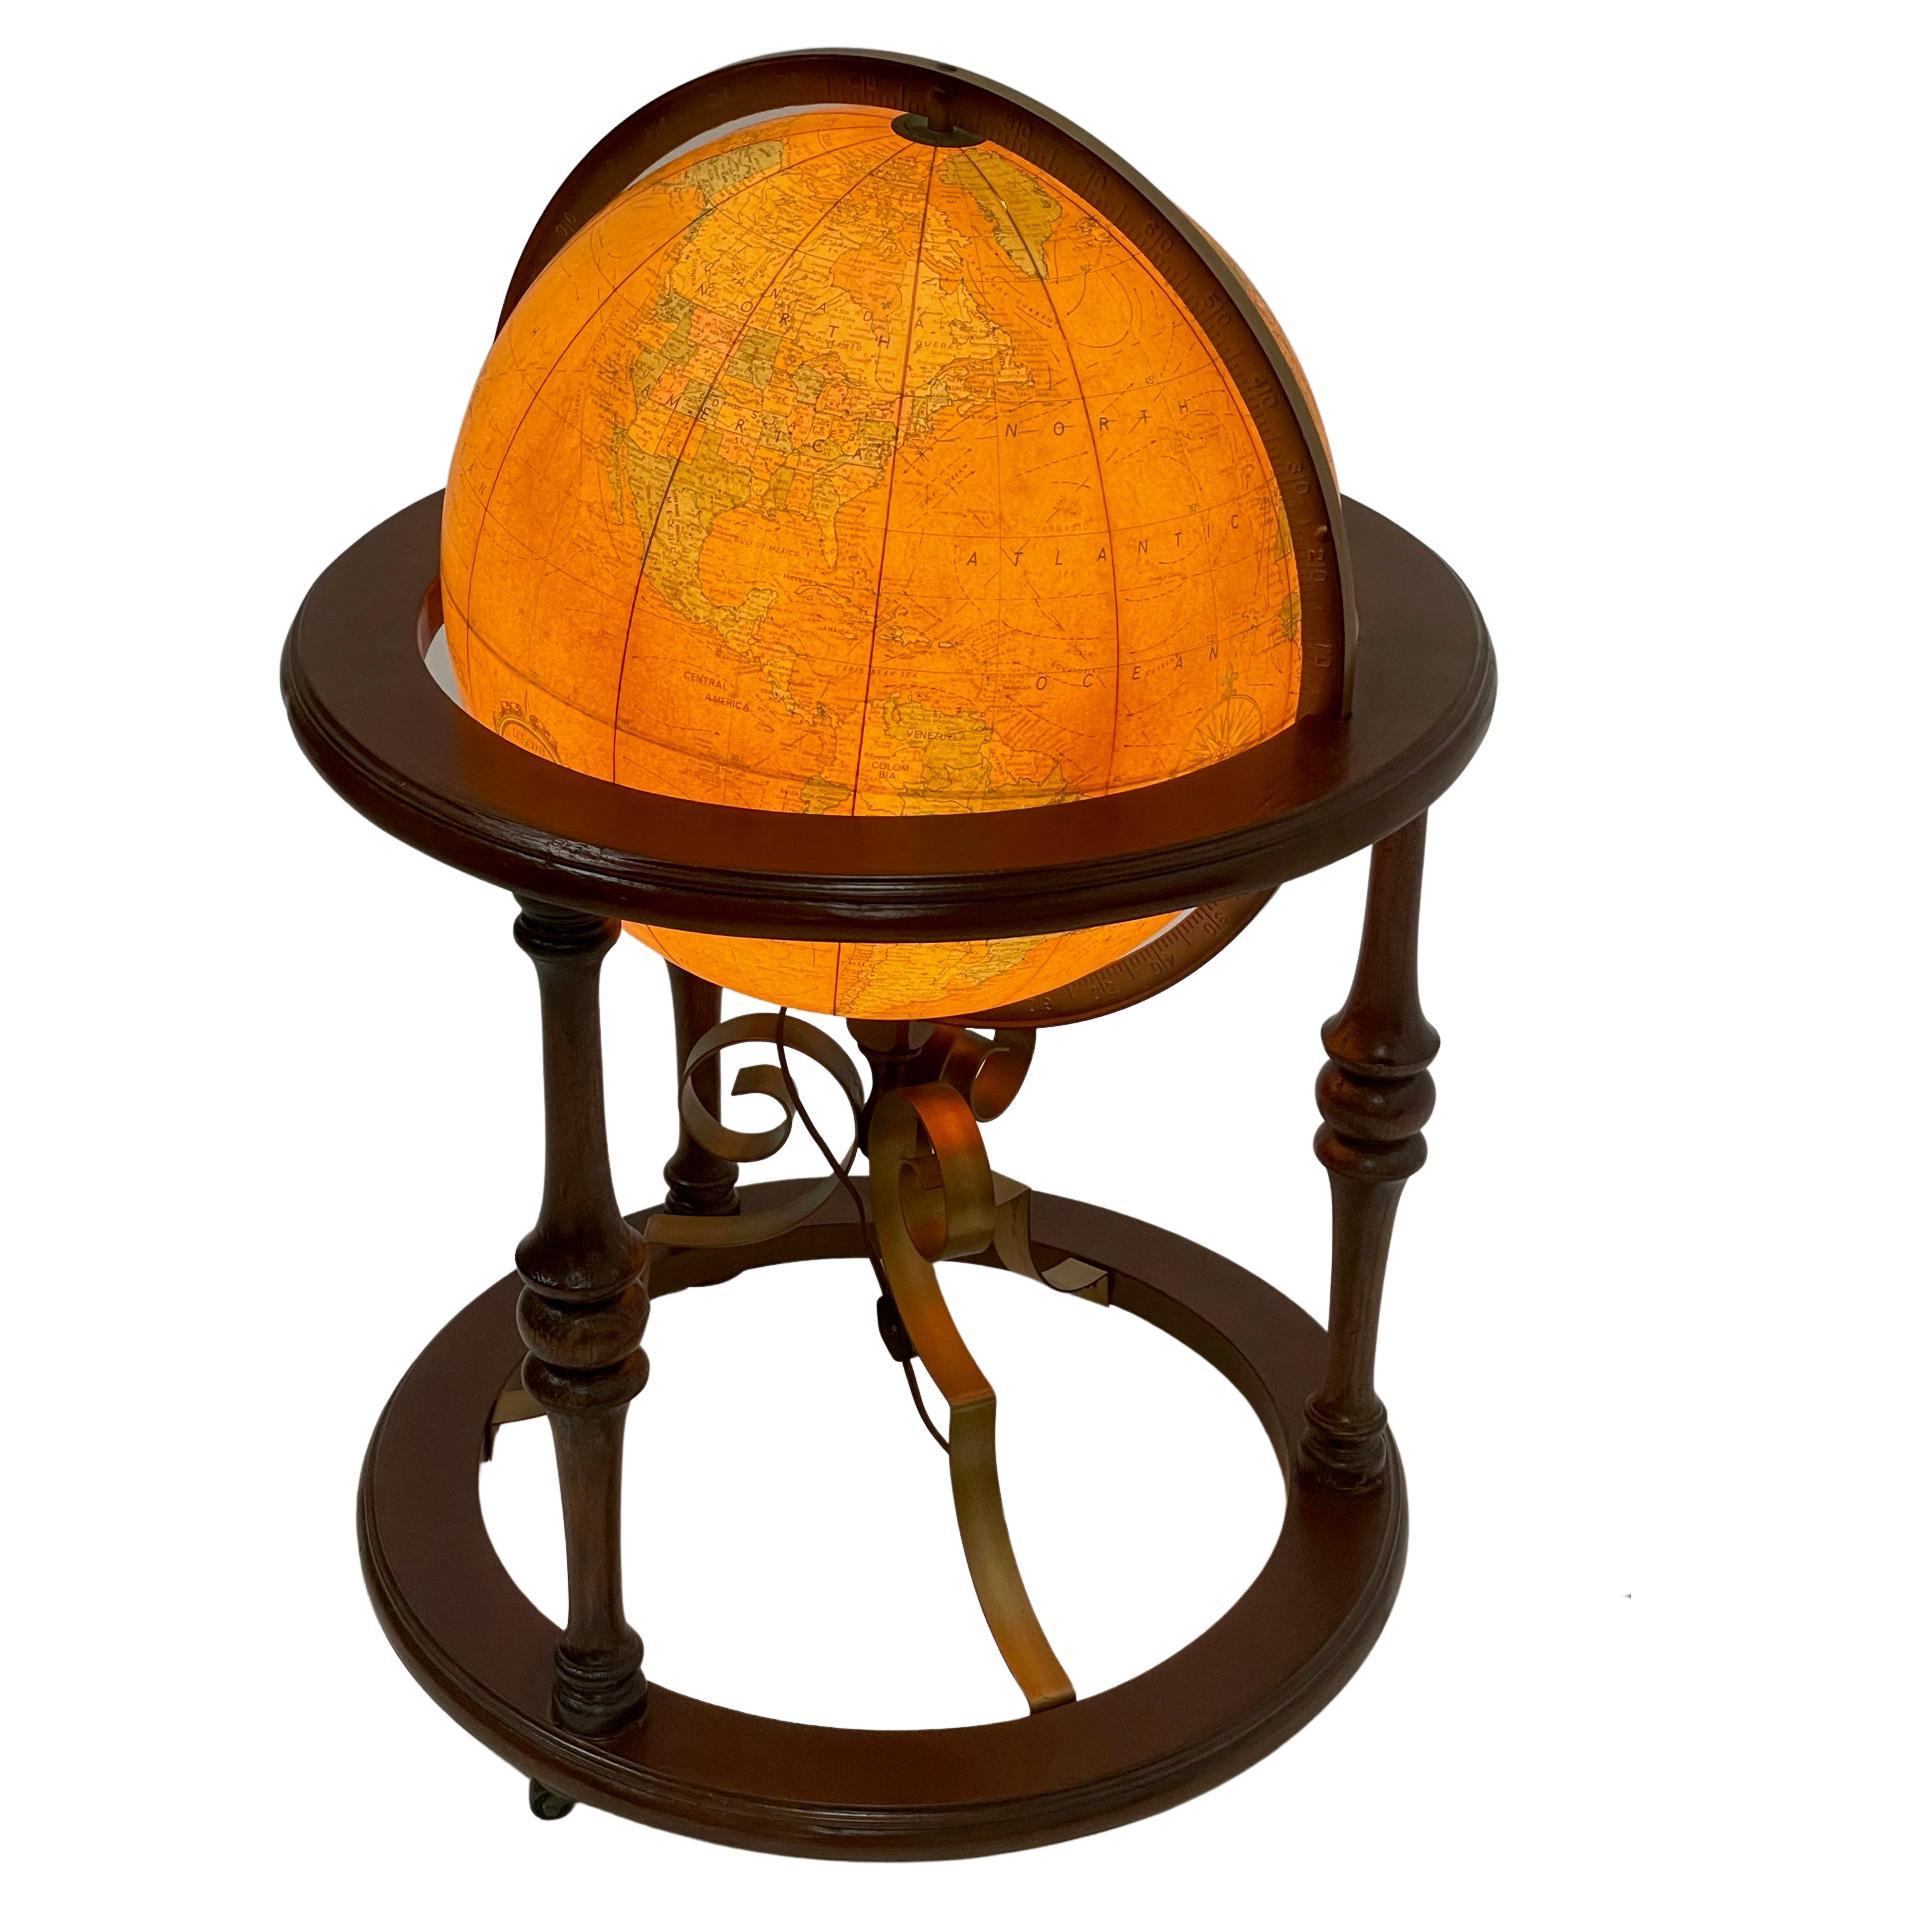 Very Handsome Illuminated Glass Globe on Iron & Walnut Stand